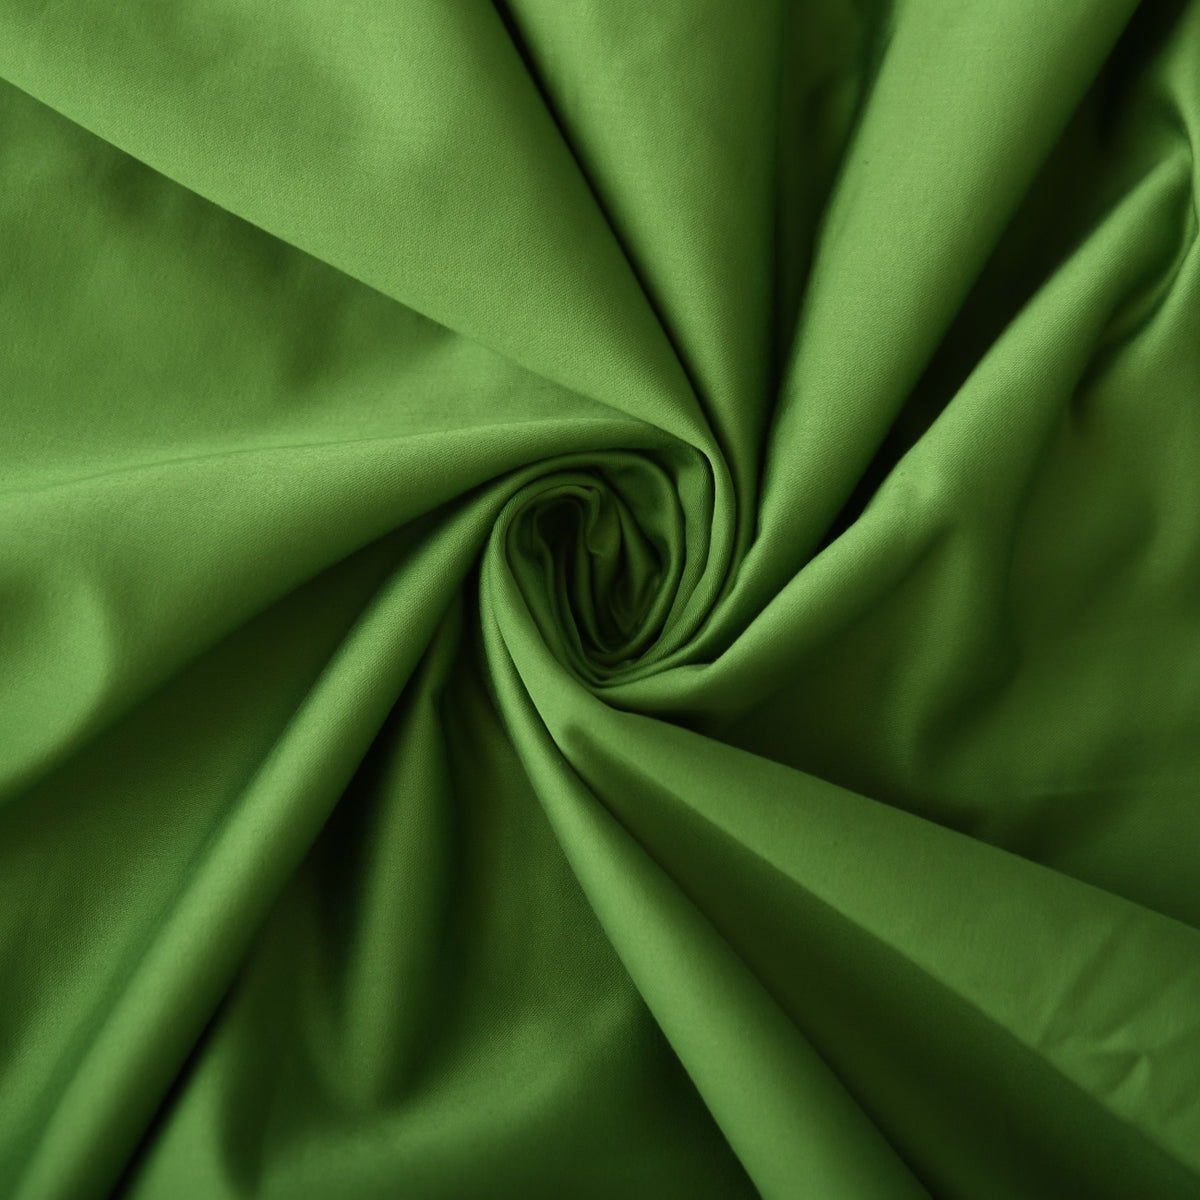 Night curtain green soft